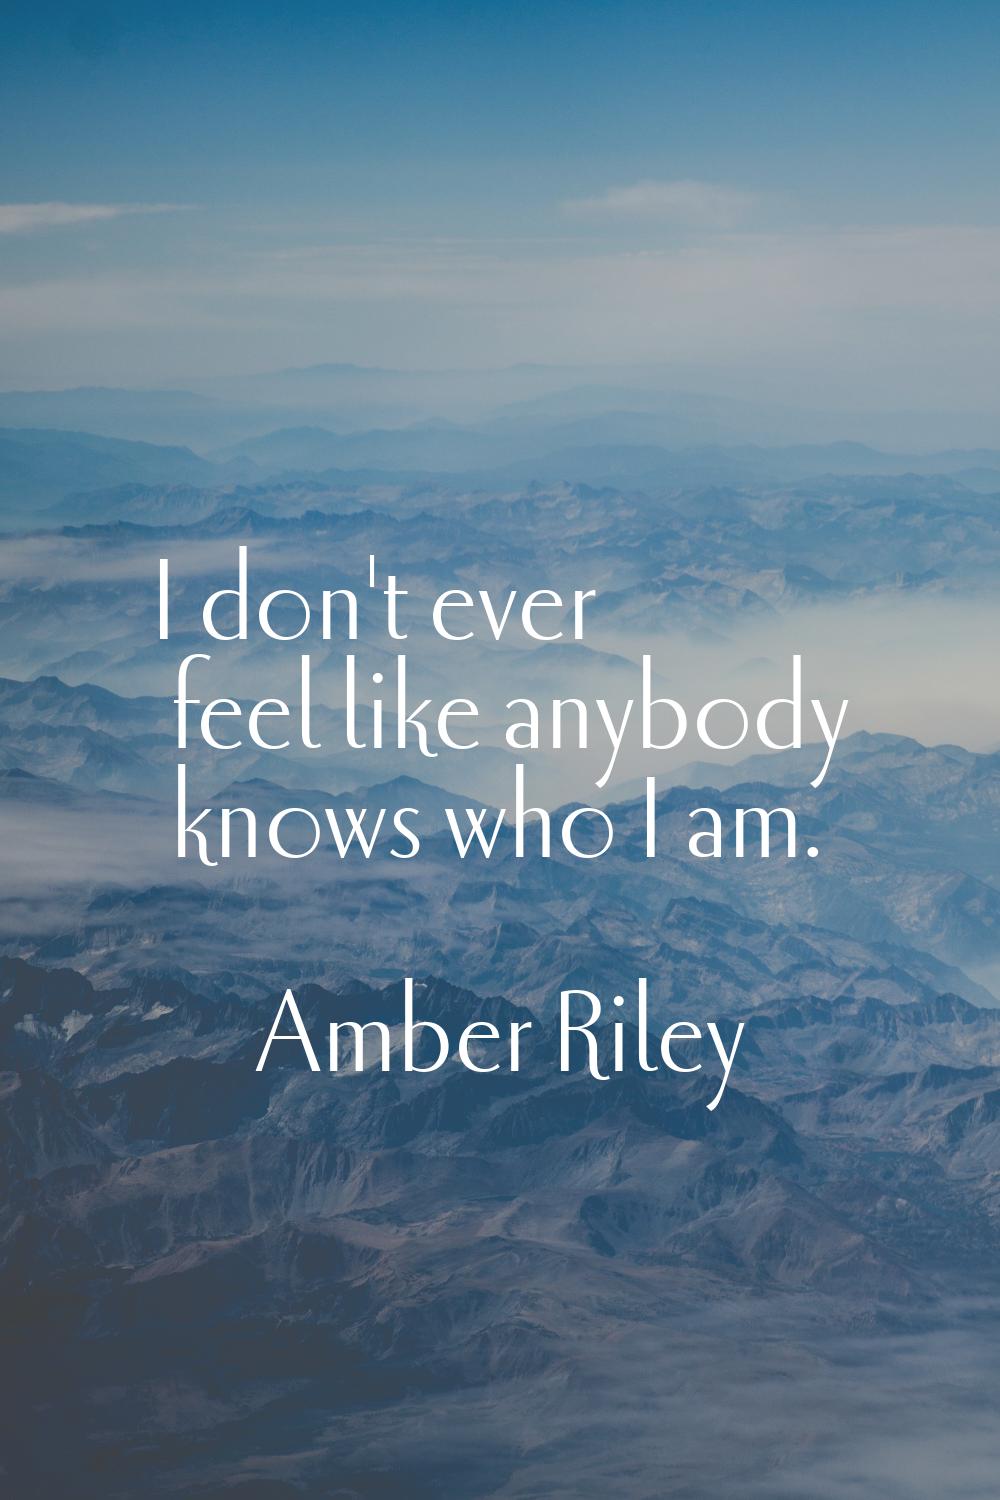 I don't ever feel like anybody knows who I am.